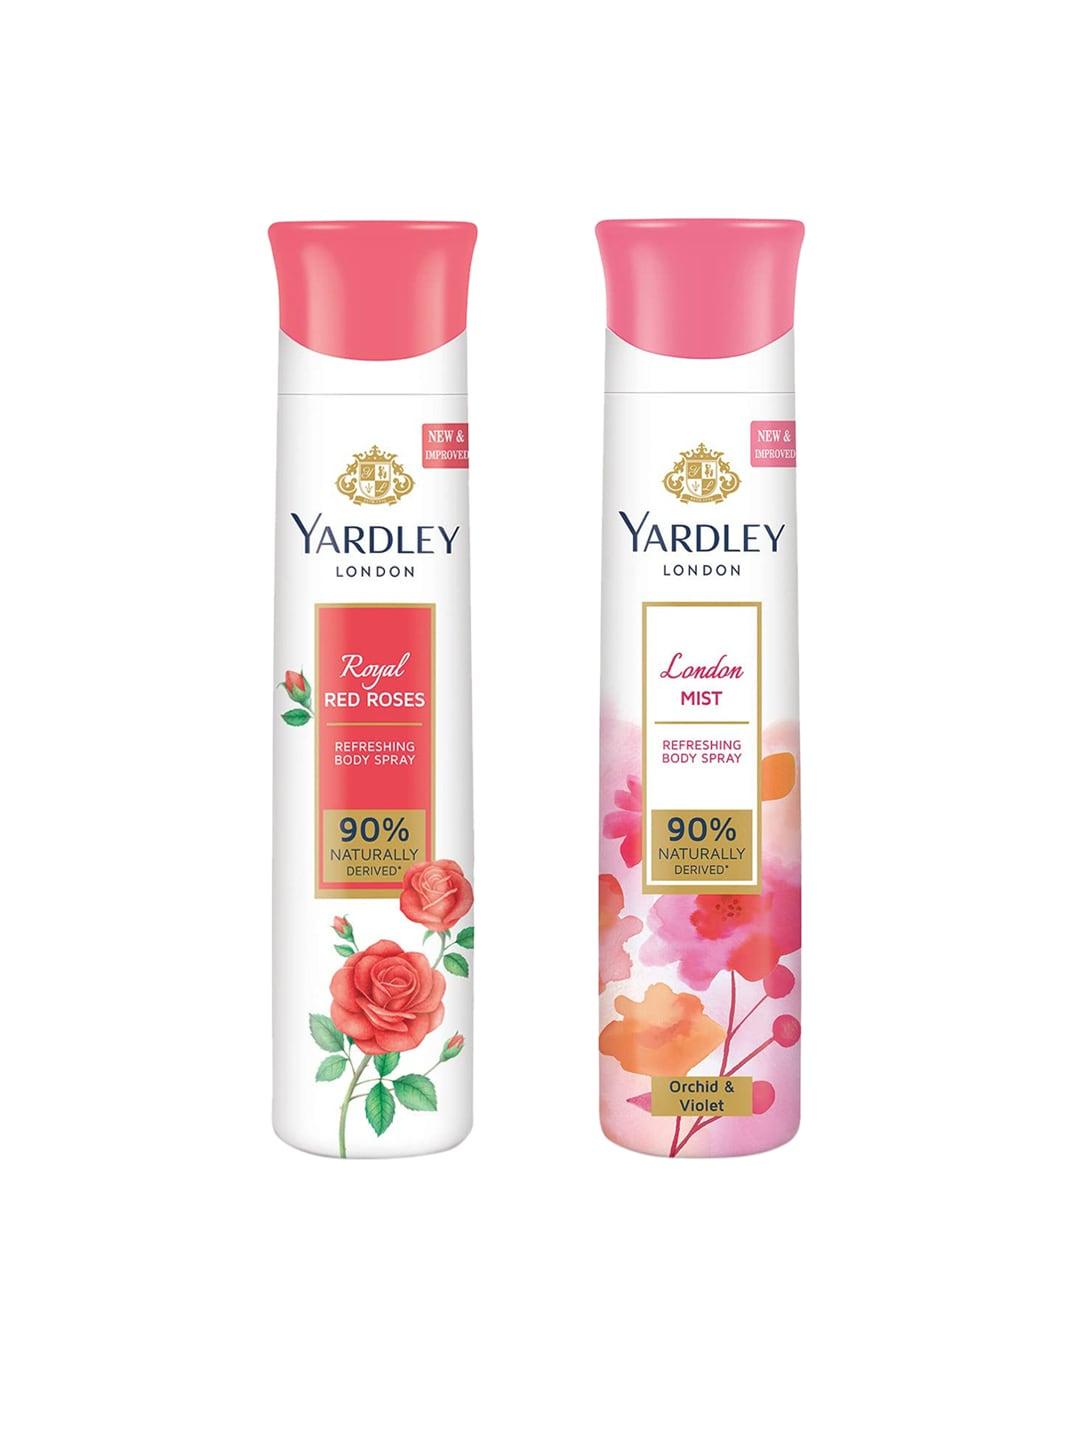 yardley london women set of 2 deodorant - london mist & royal red roses - 150ml each